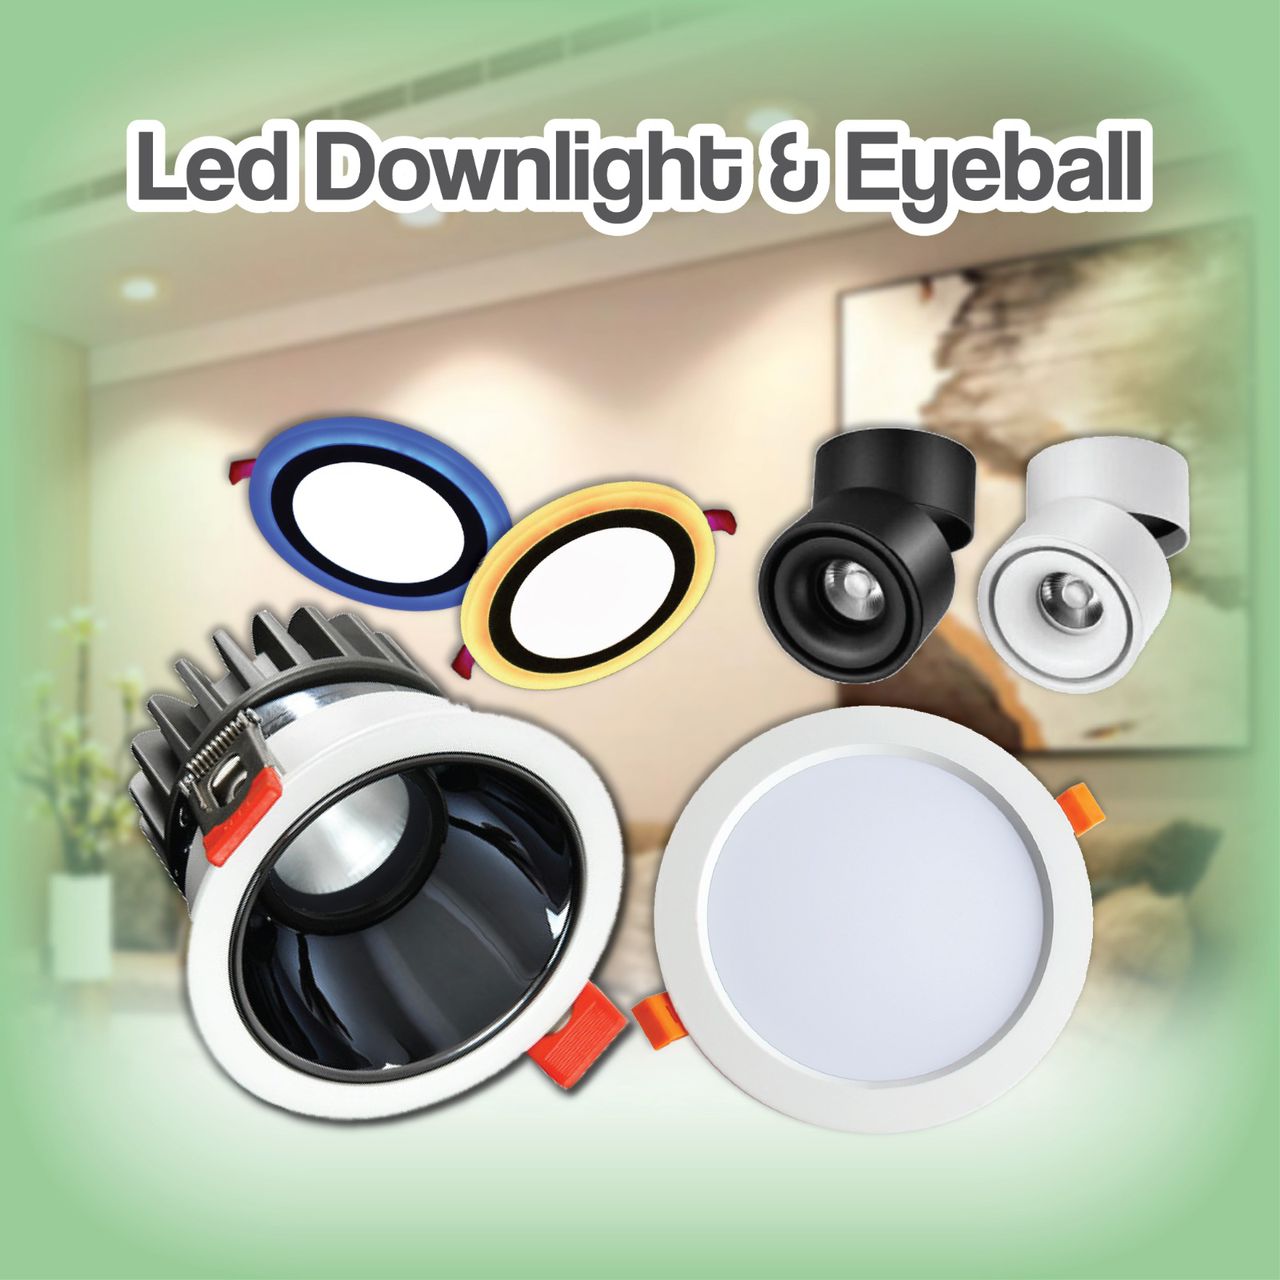 LED Downlight & Eyeball